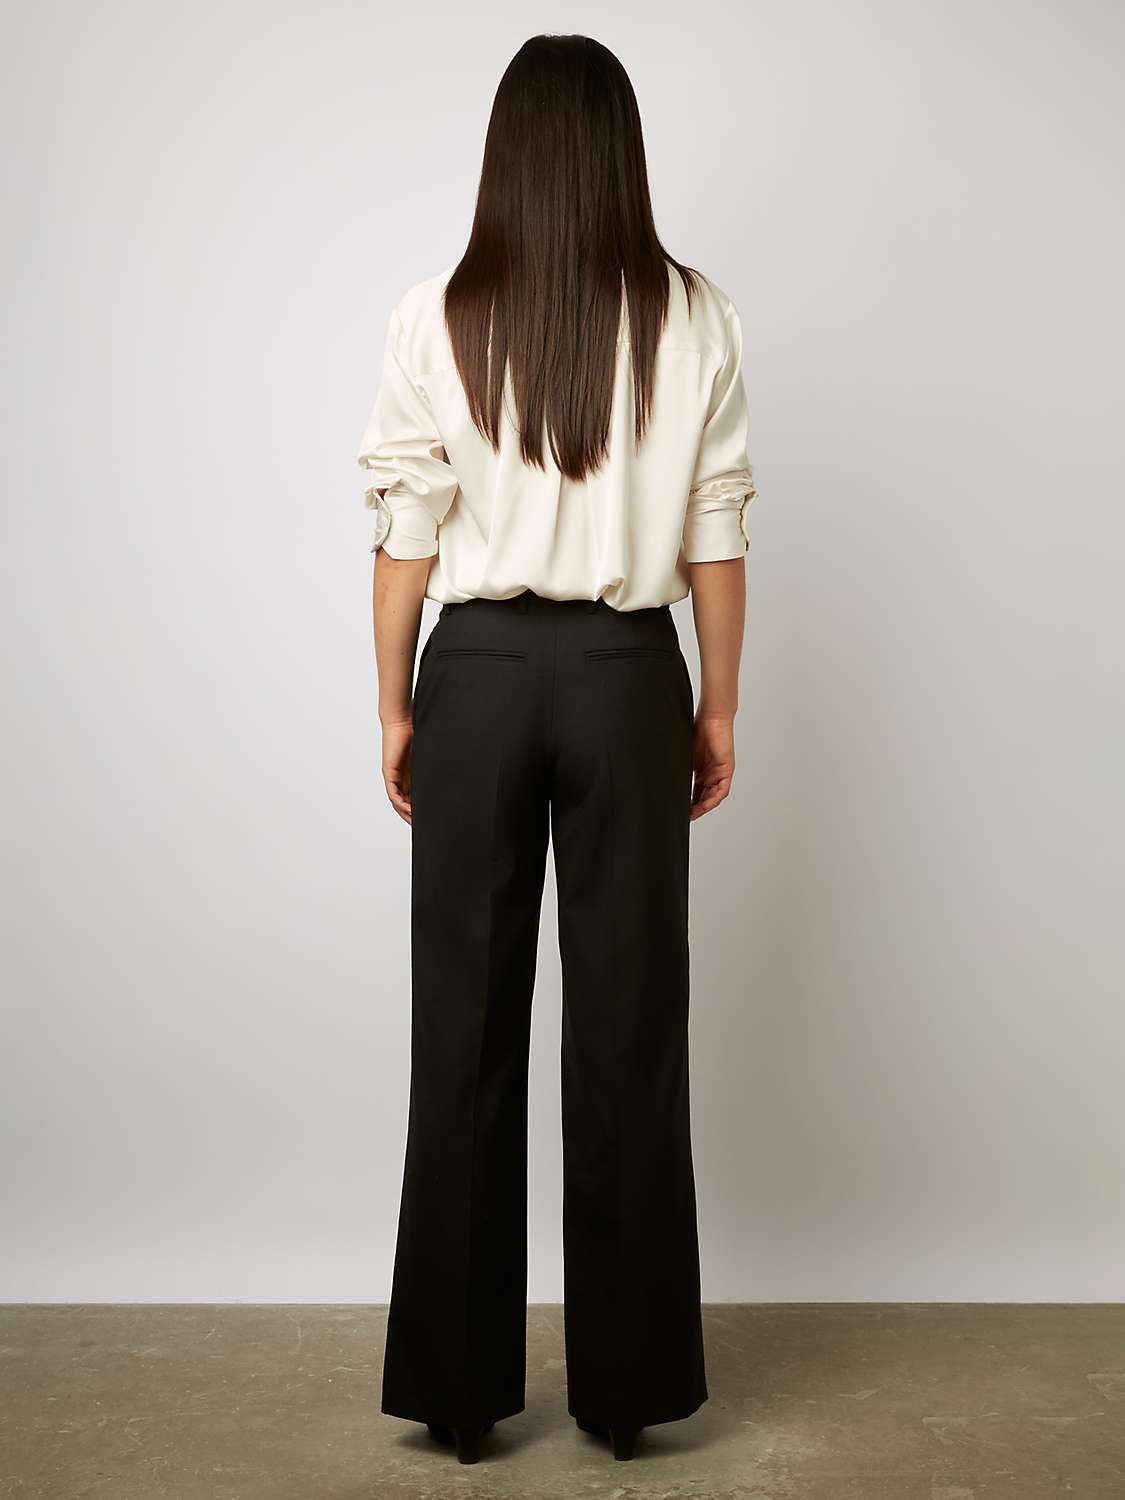 Buy Gerard Darel Dali Wool Blend Tailored Trousers, Black Online at johnlewis.com